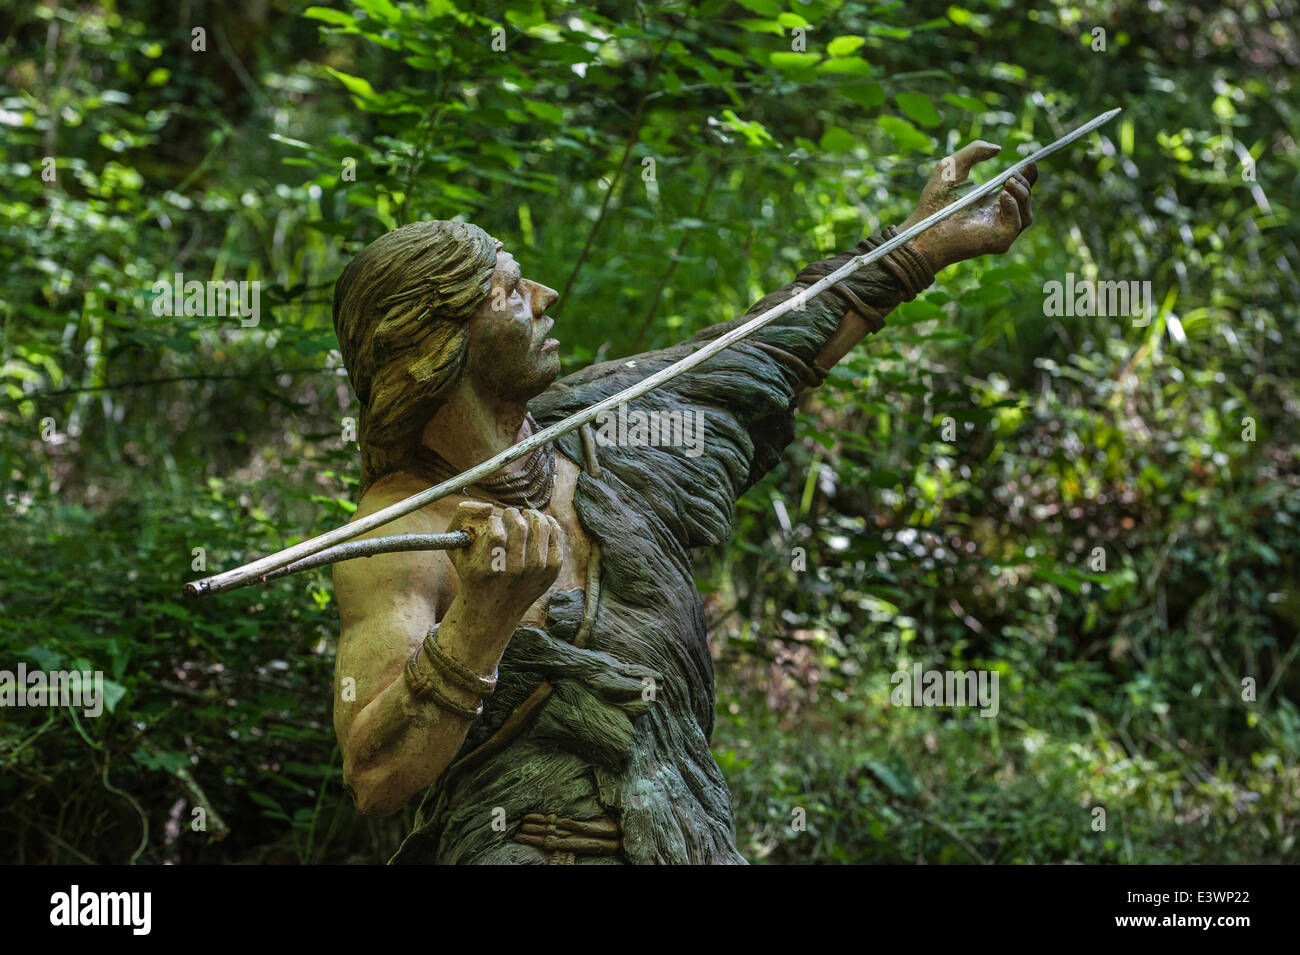 Cro-magnon hunter arrojar lanza con ayuda de lanza-lanzador / atlatl, Prehisto Parc, Tursac, Périgord, Dordogne, Francia Foto de stock